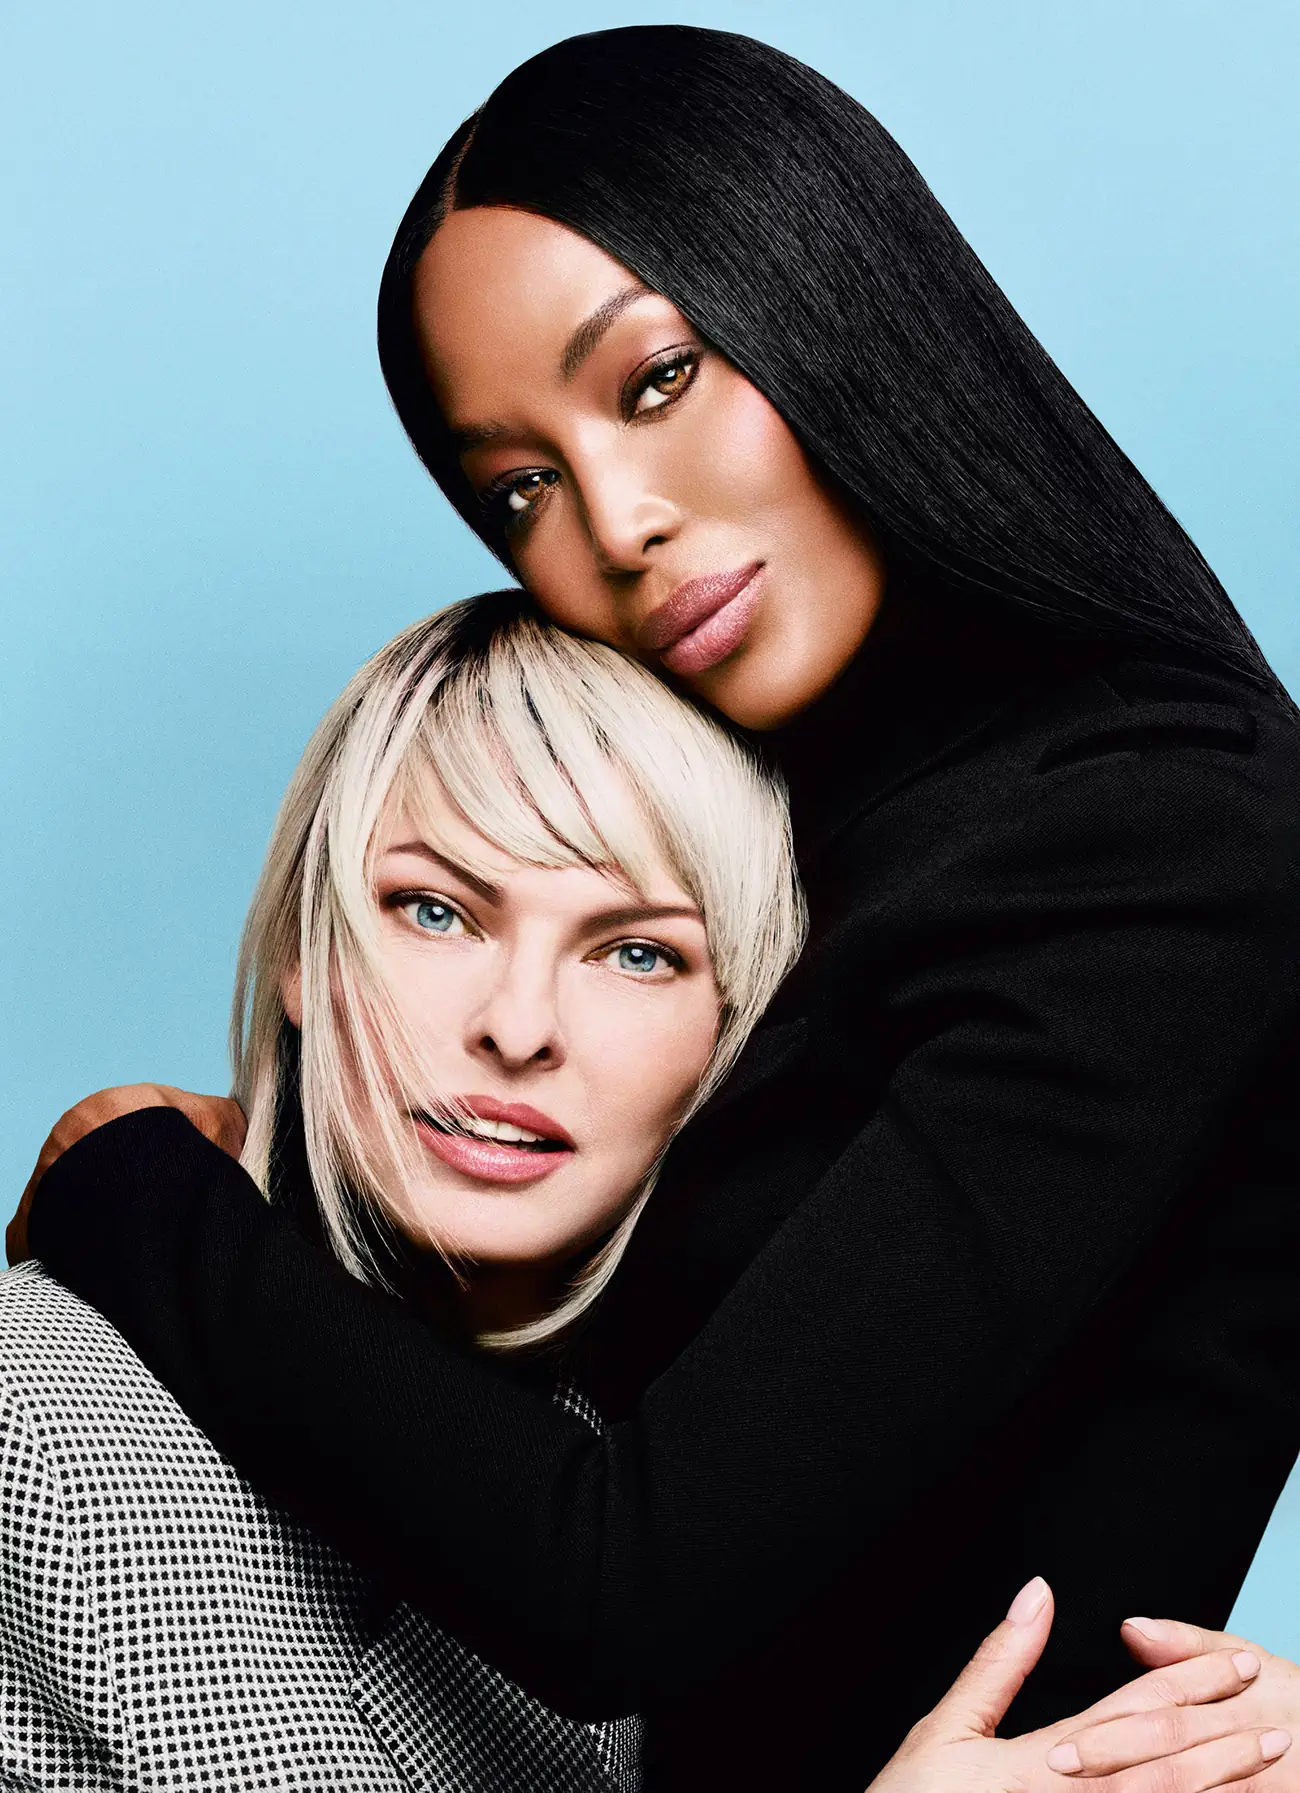 Supermodels reunite for Vogue US and British Vogue's September 2023 issue